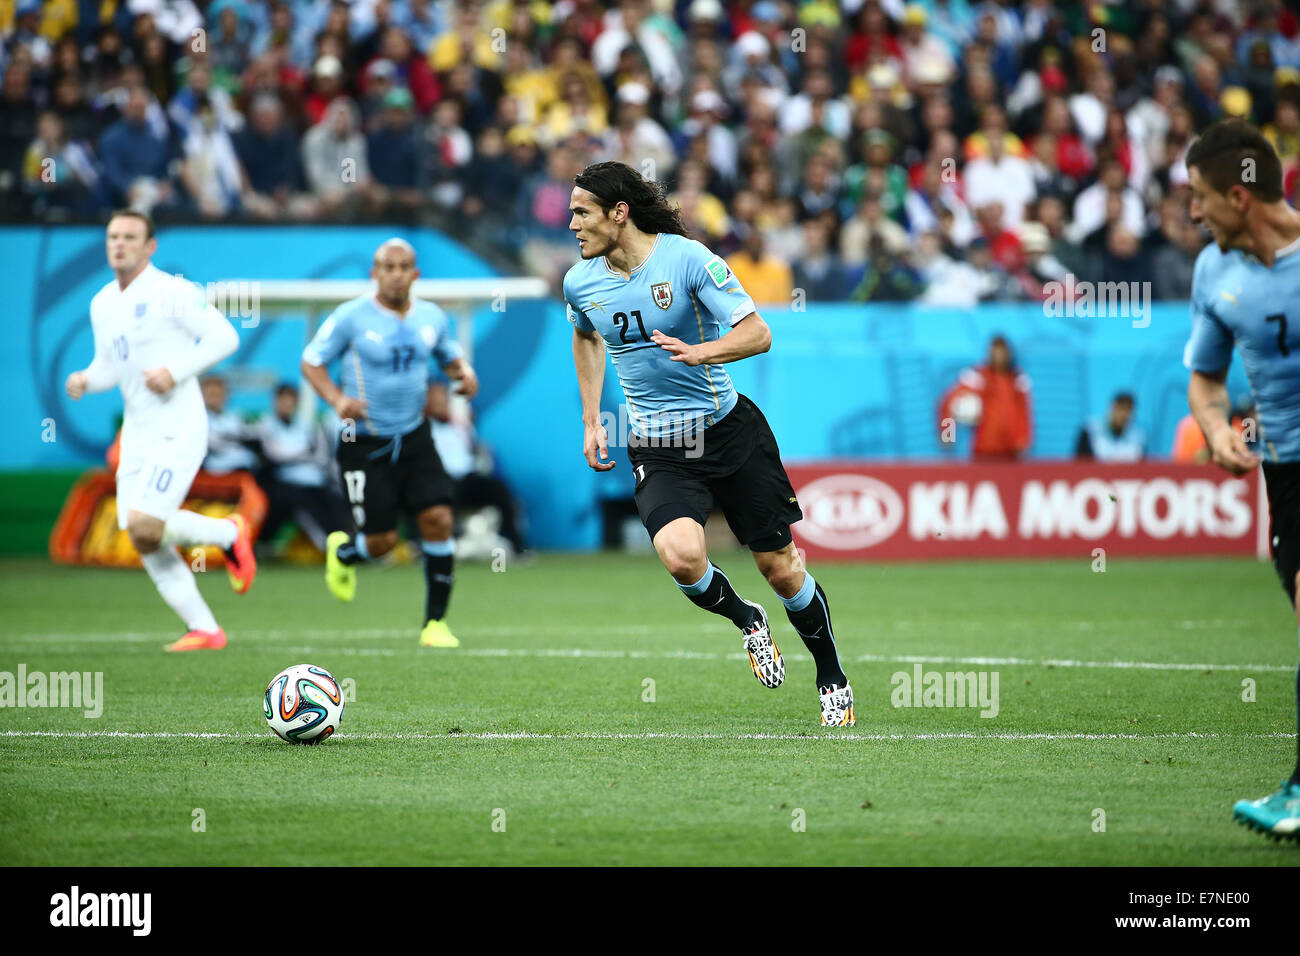 Edinson Cavani. Uruguay v England, group match. FIFA World Cup 2014. Arena de Sao Paulo, Sao Paulo. 19 Jun 2014 Stock Photo